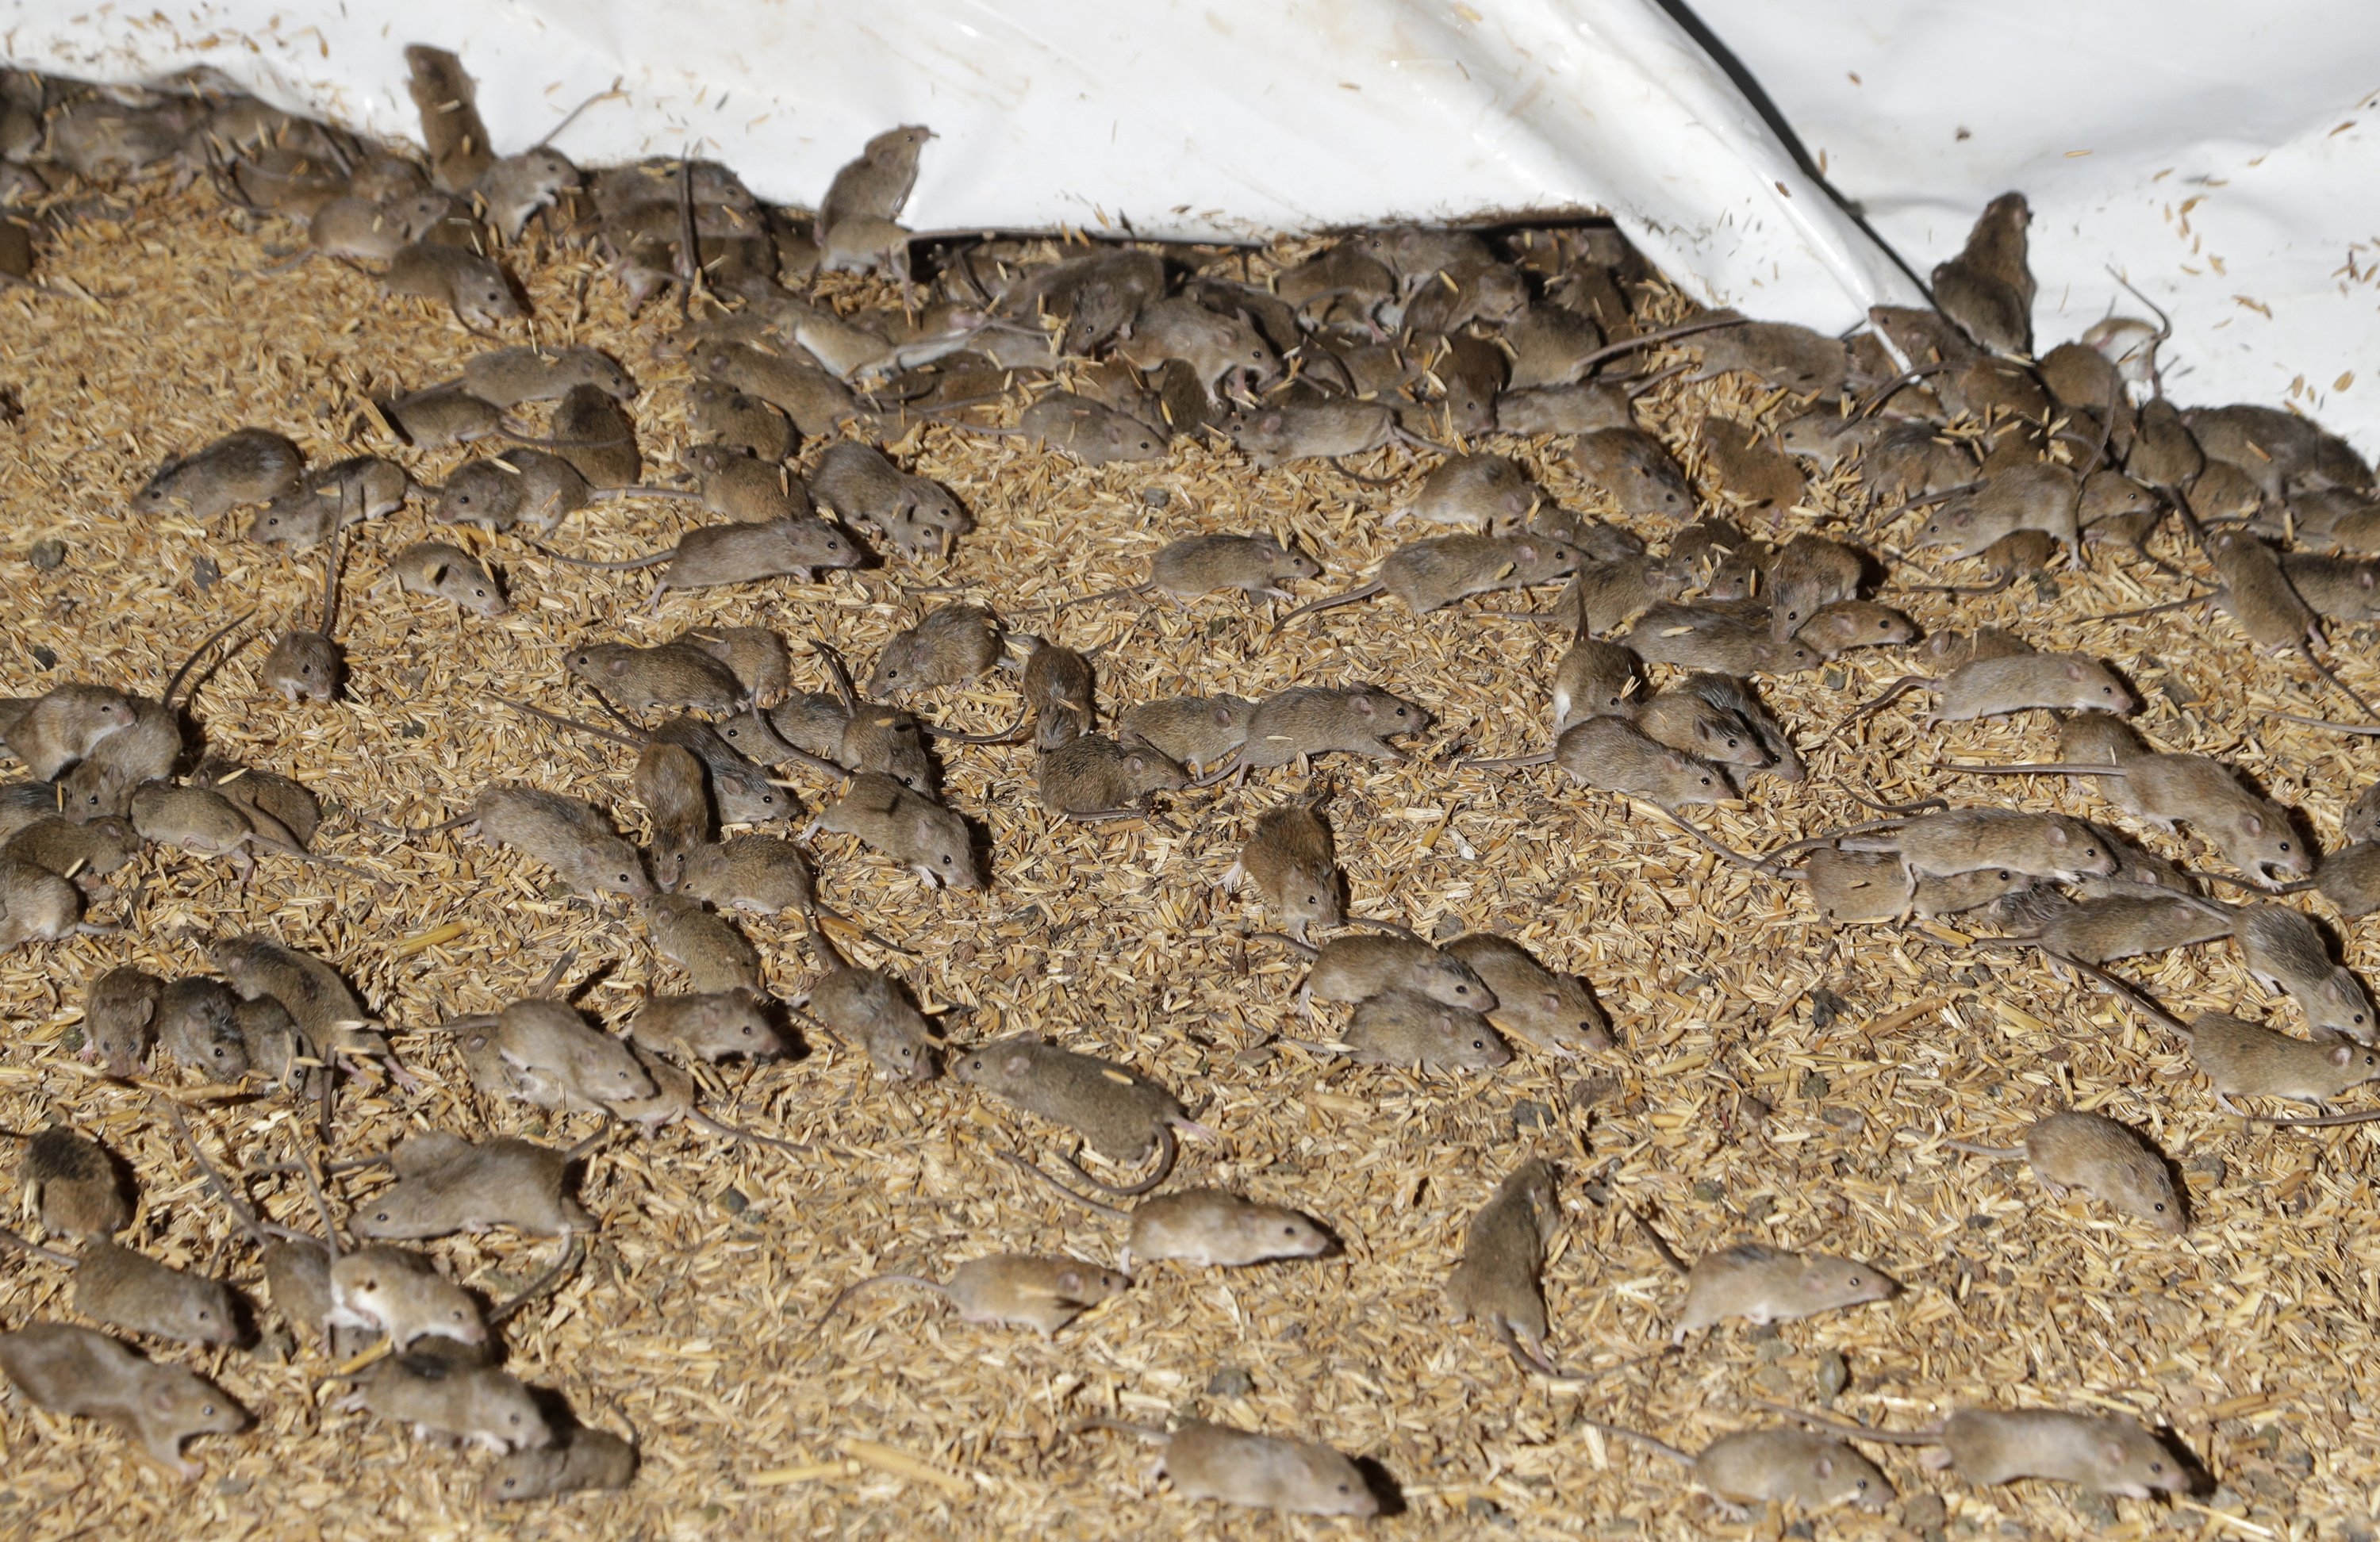 Mice scurry around stored grain on a farm near Tottenham, Australia, May 19, 2021. (AP Photo)